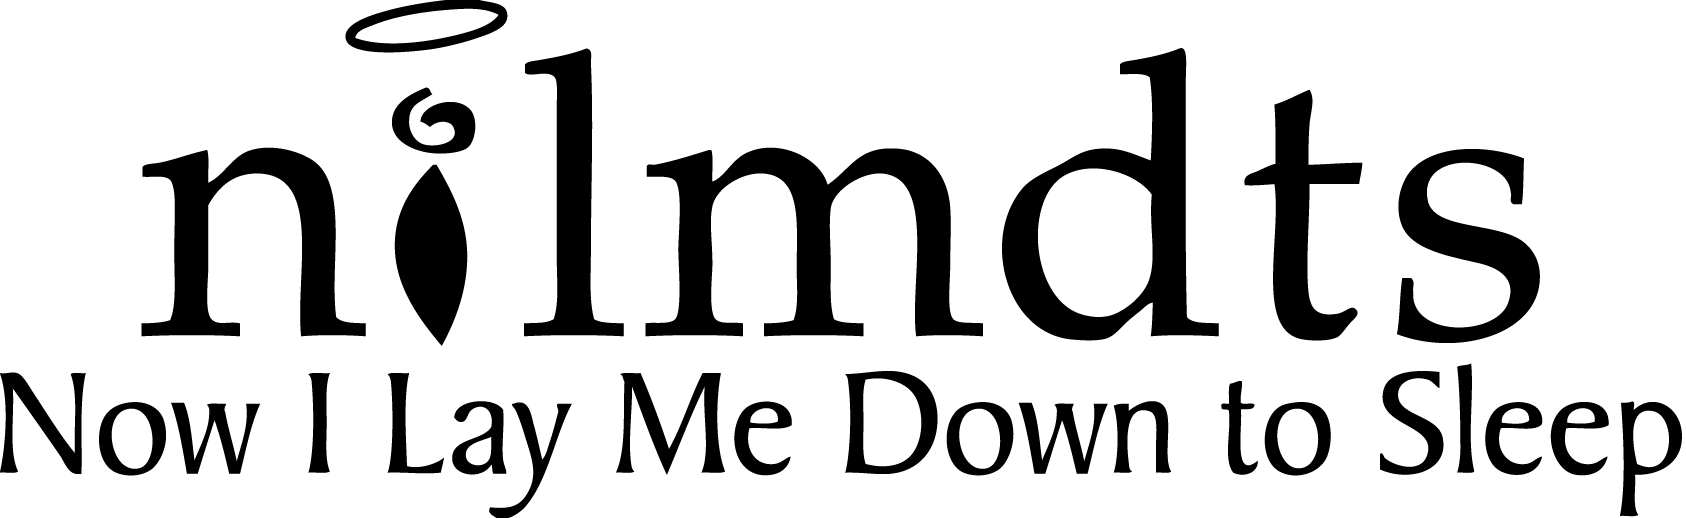 NILMDTS Logo-Approved